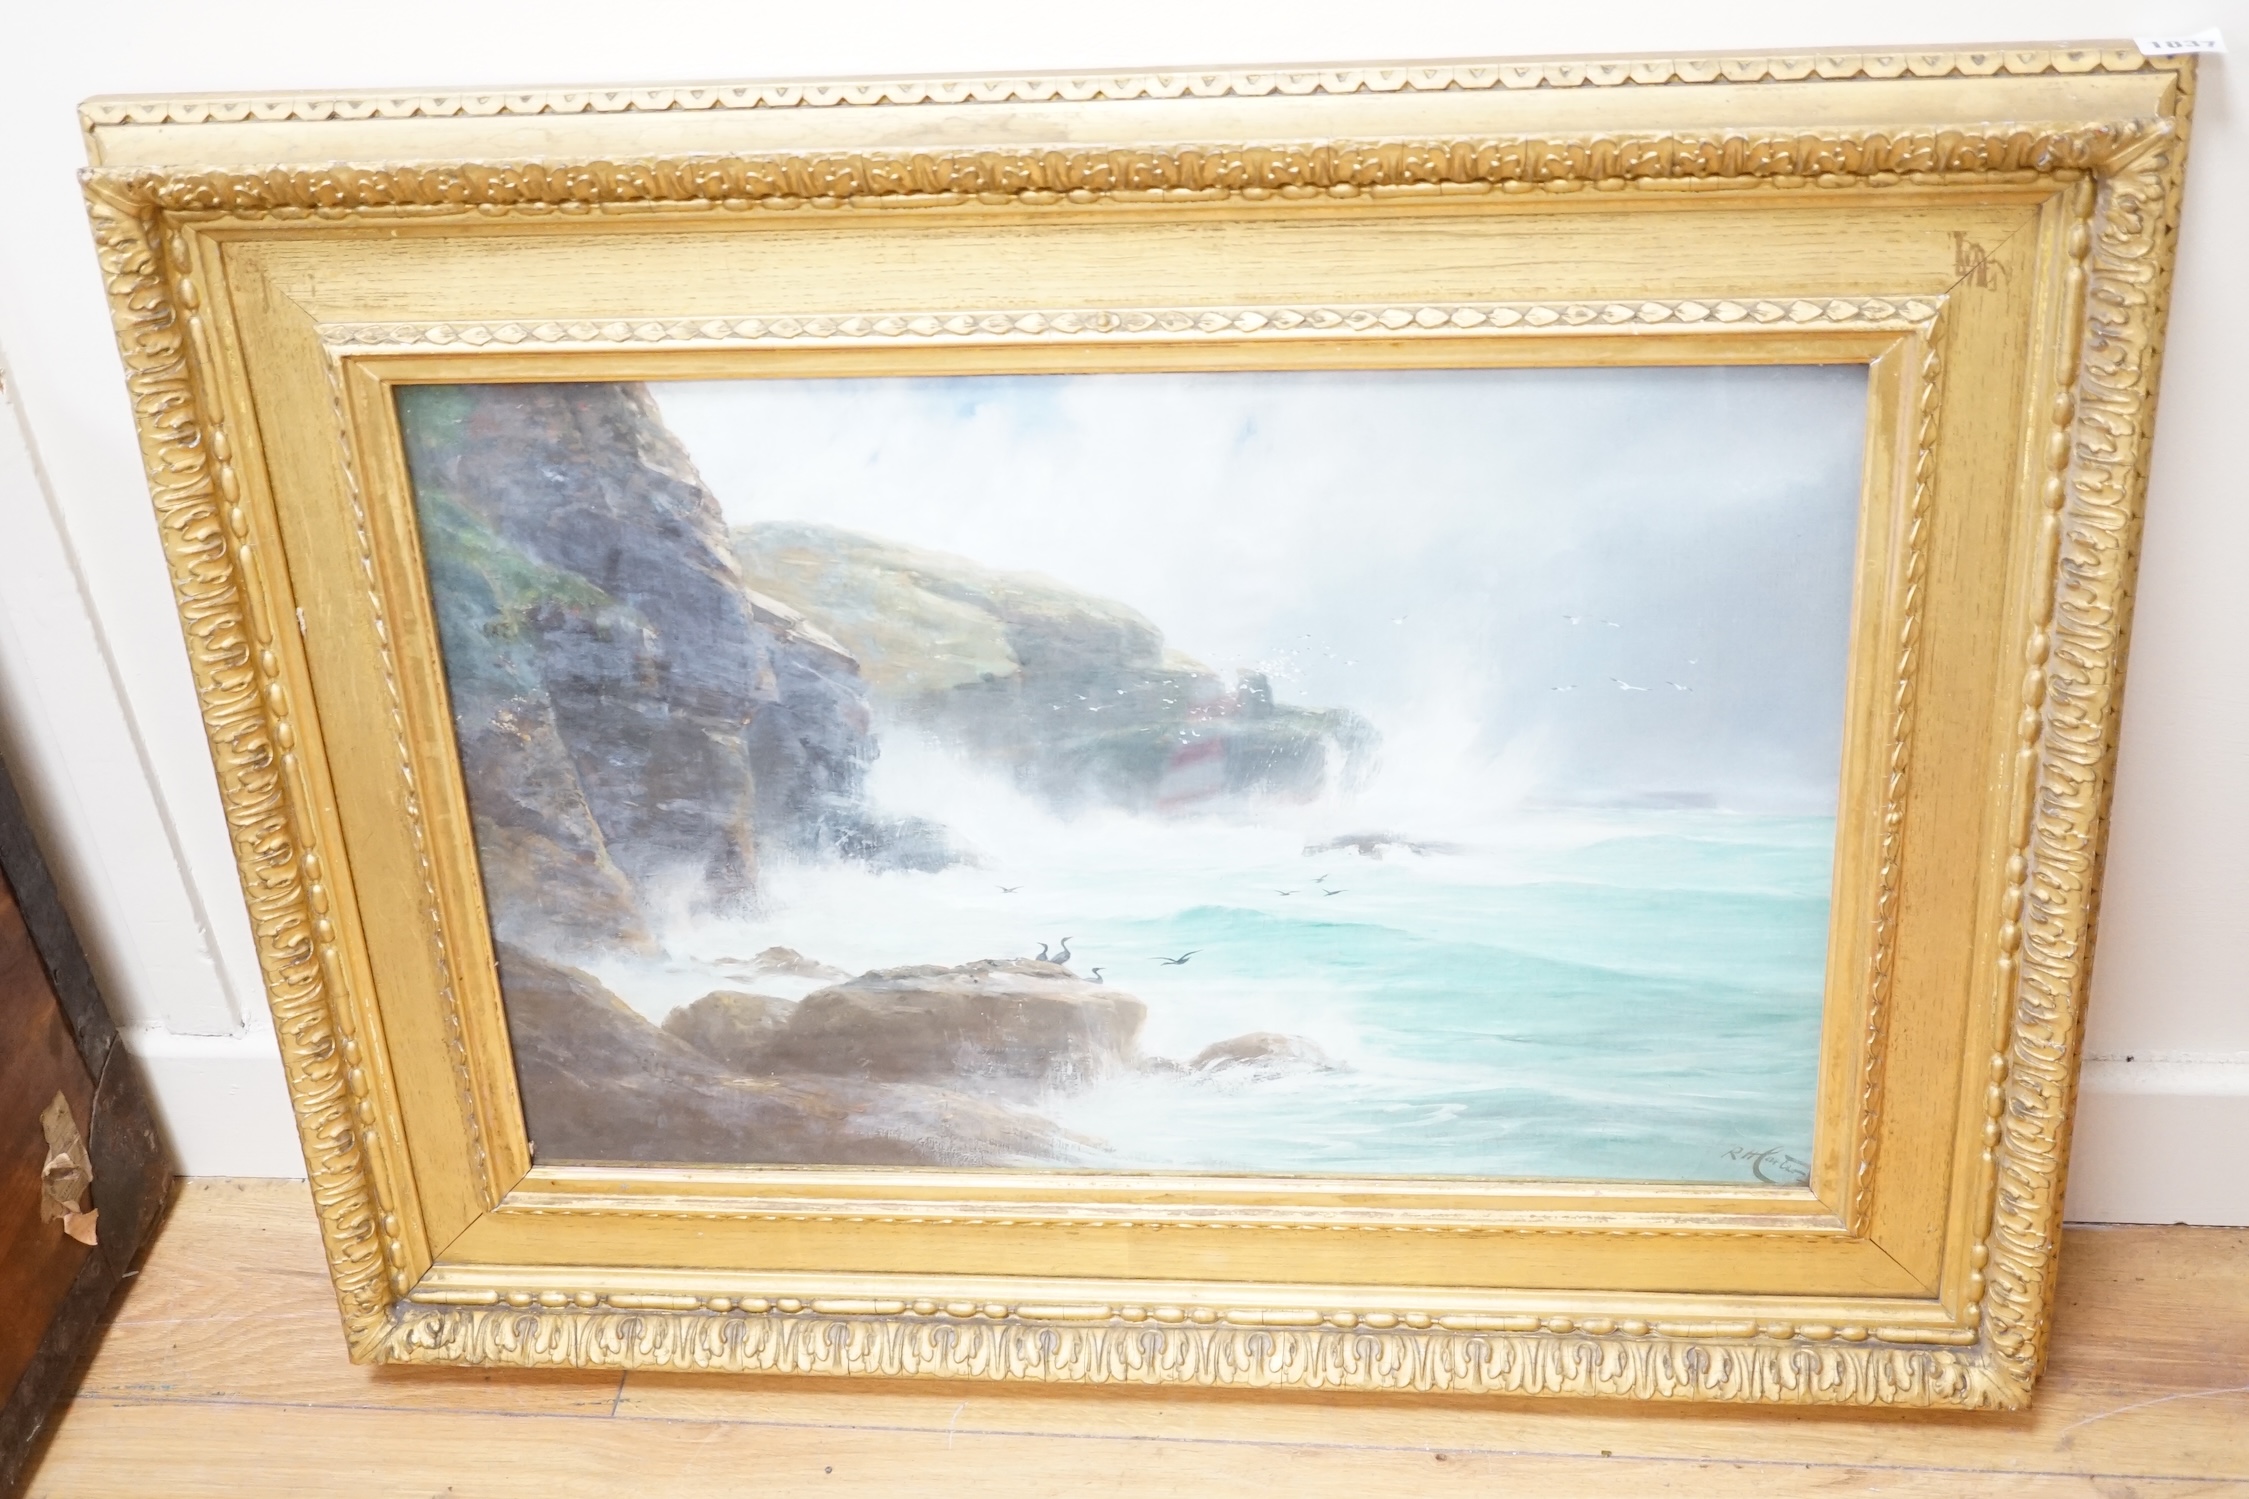 Richard Harry Carter (1839-1911), oil, Seascape with rocky cliffs, signed, 39 x 59cm. Condition - fair